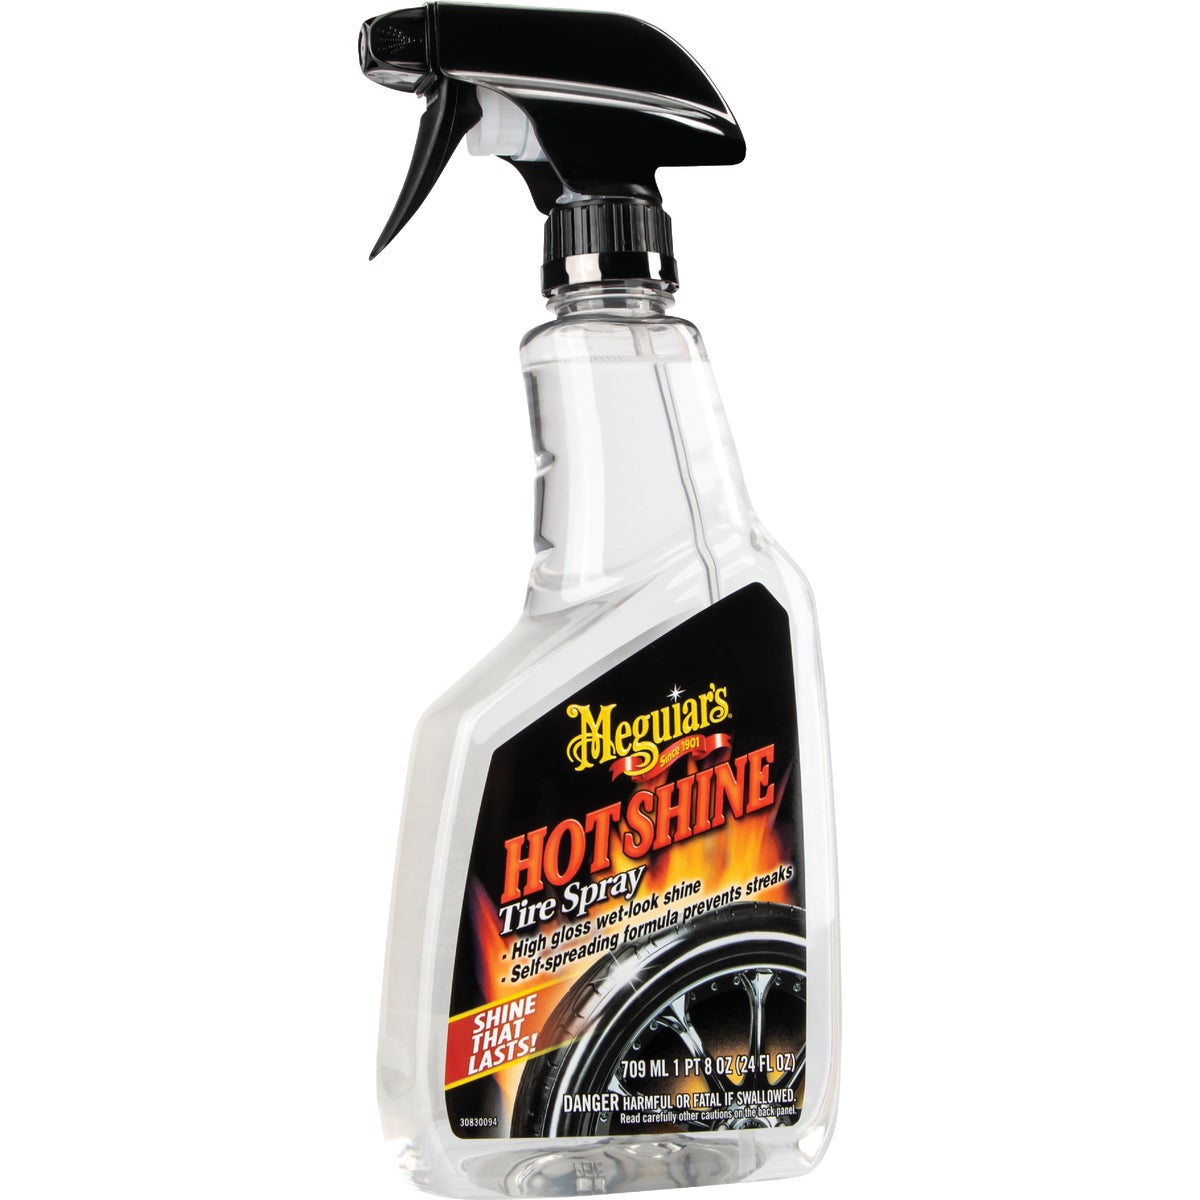 Meguiars Hot Shine High Gloss 24 Oz. Trigger Spray Tire Shine